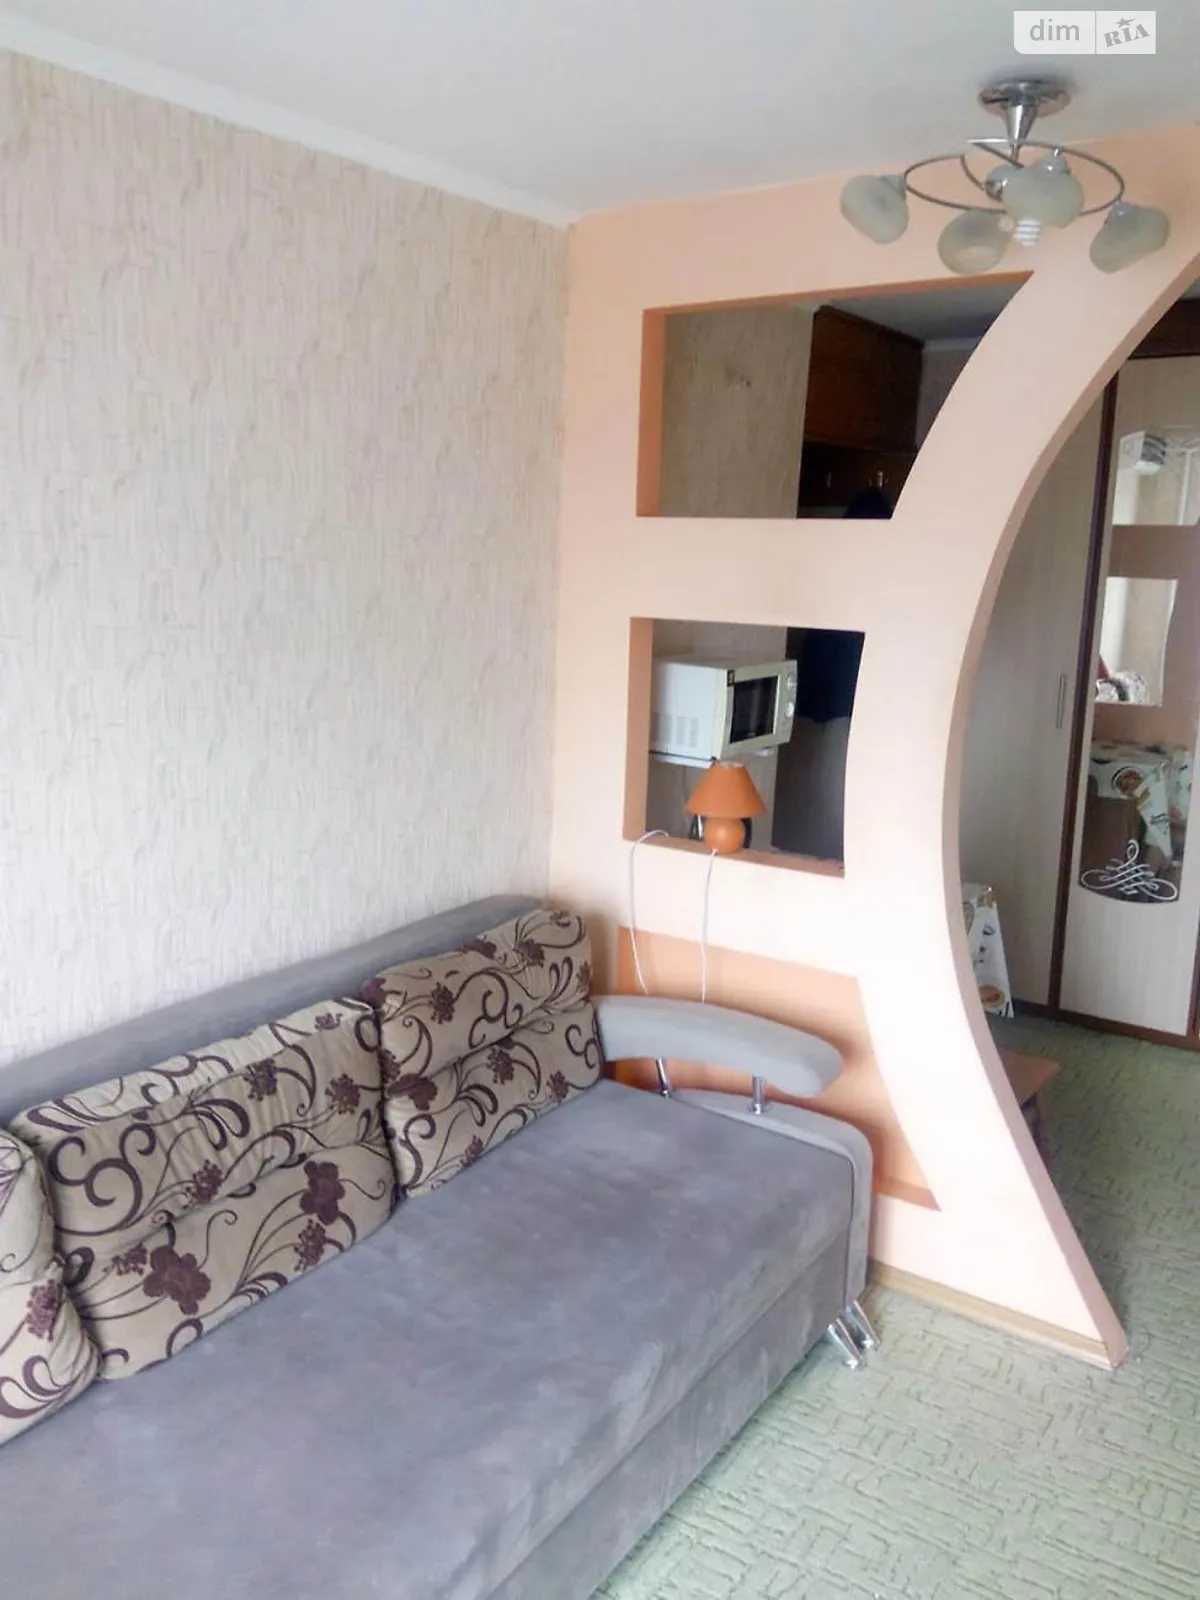 Продается комната 35 кв. м в Киеве, цена: 21500 $ - фото 1